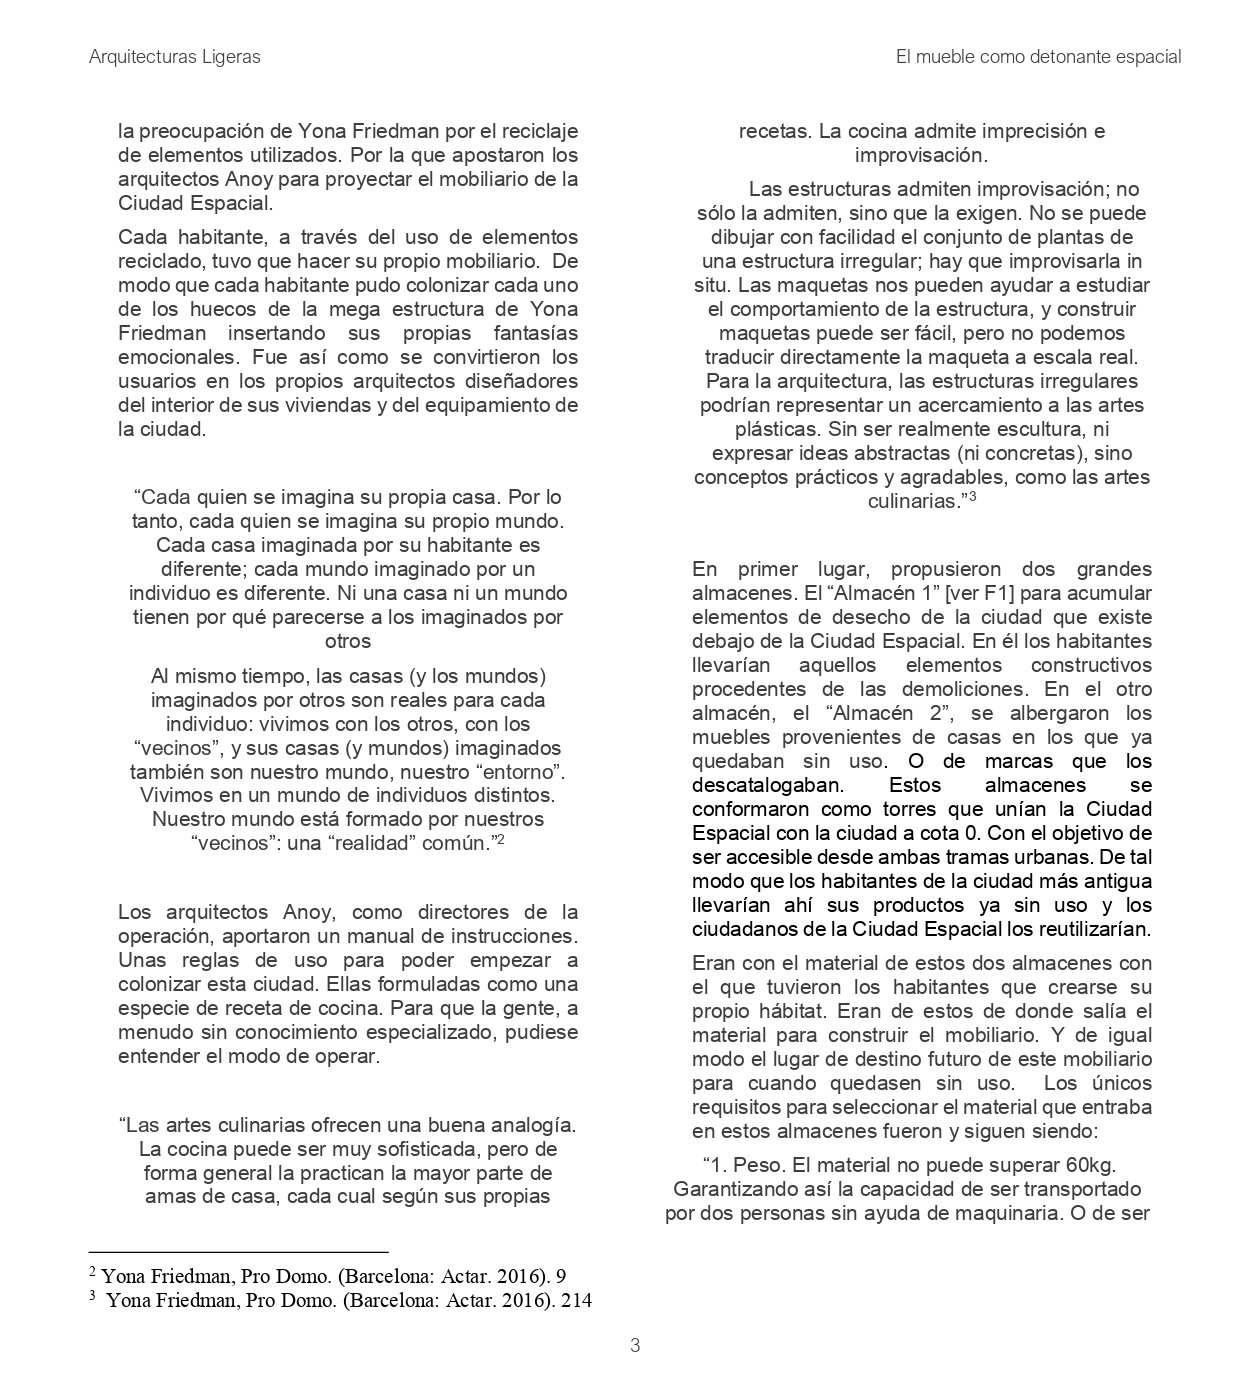 PDF -  MOBILIARIO INDIVIDUALIZACION DE MASAS - RAÚL ALMENARA._page-0004.jpg